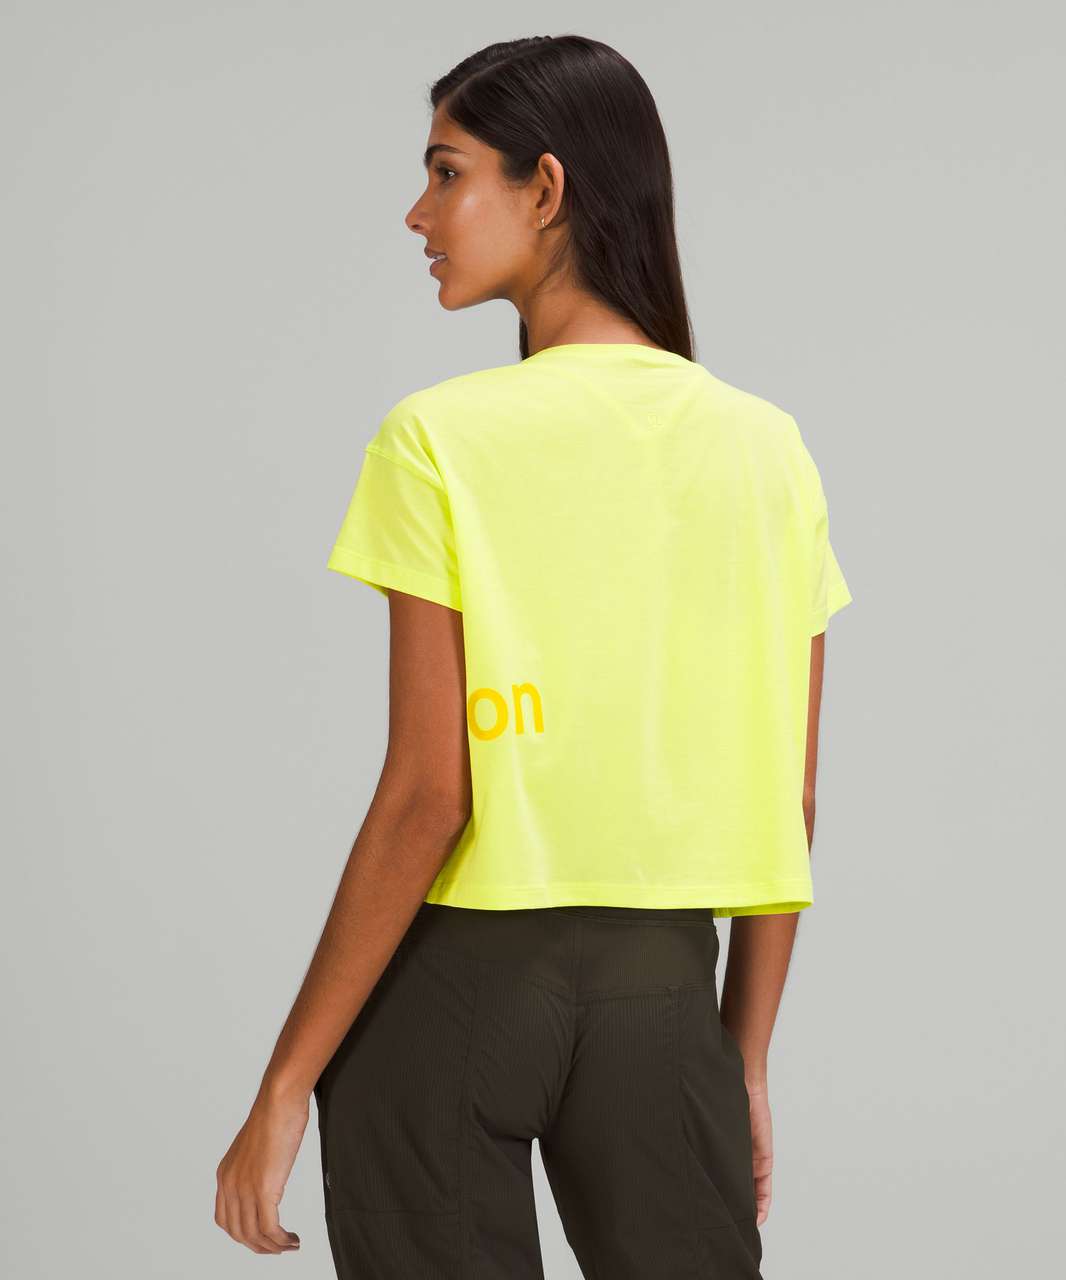 Lululemon Cates T-Shirt - Electric Lemon